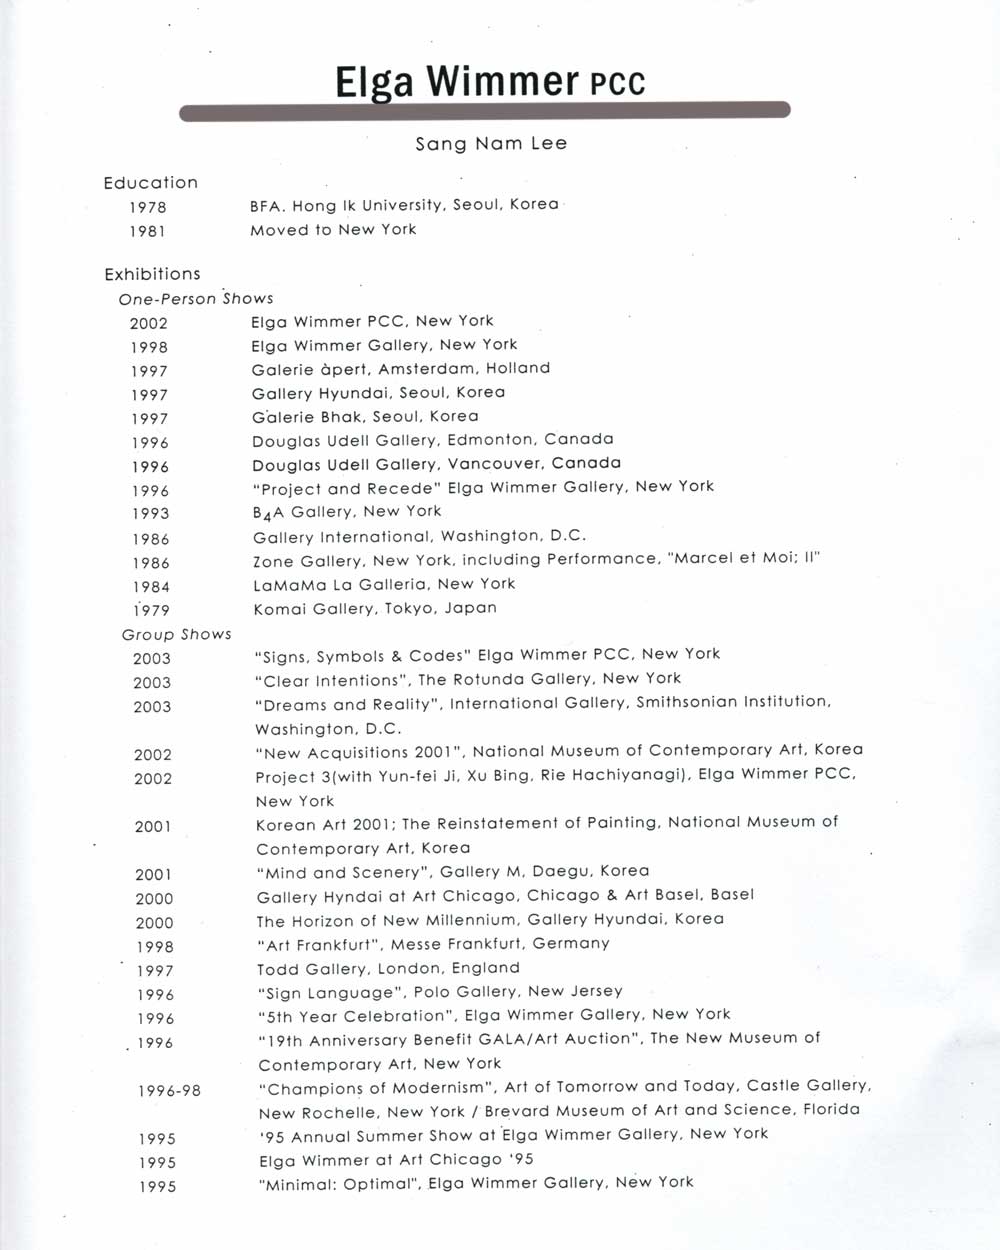 Sang Nam Lee's Resume, pg 1